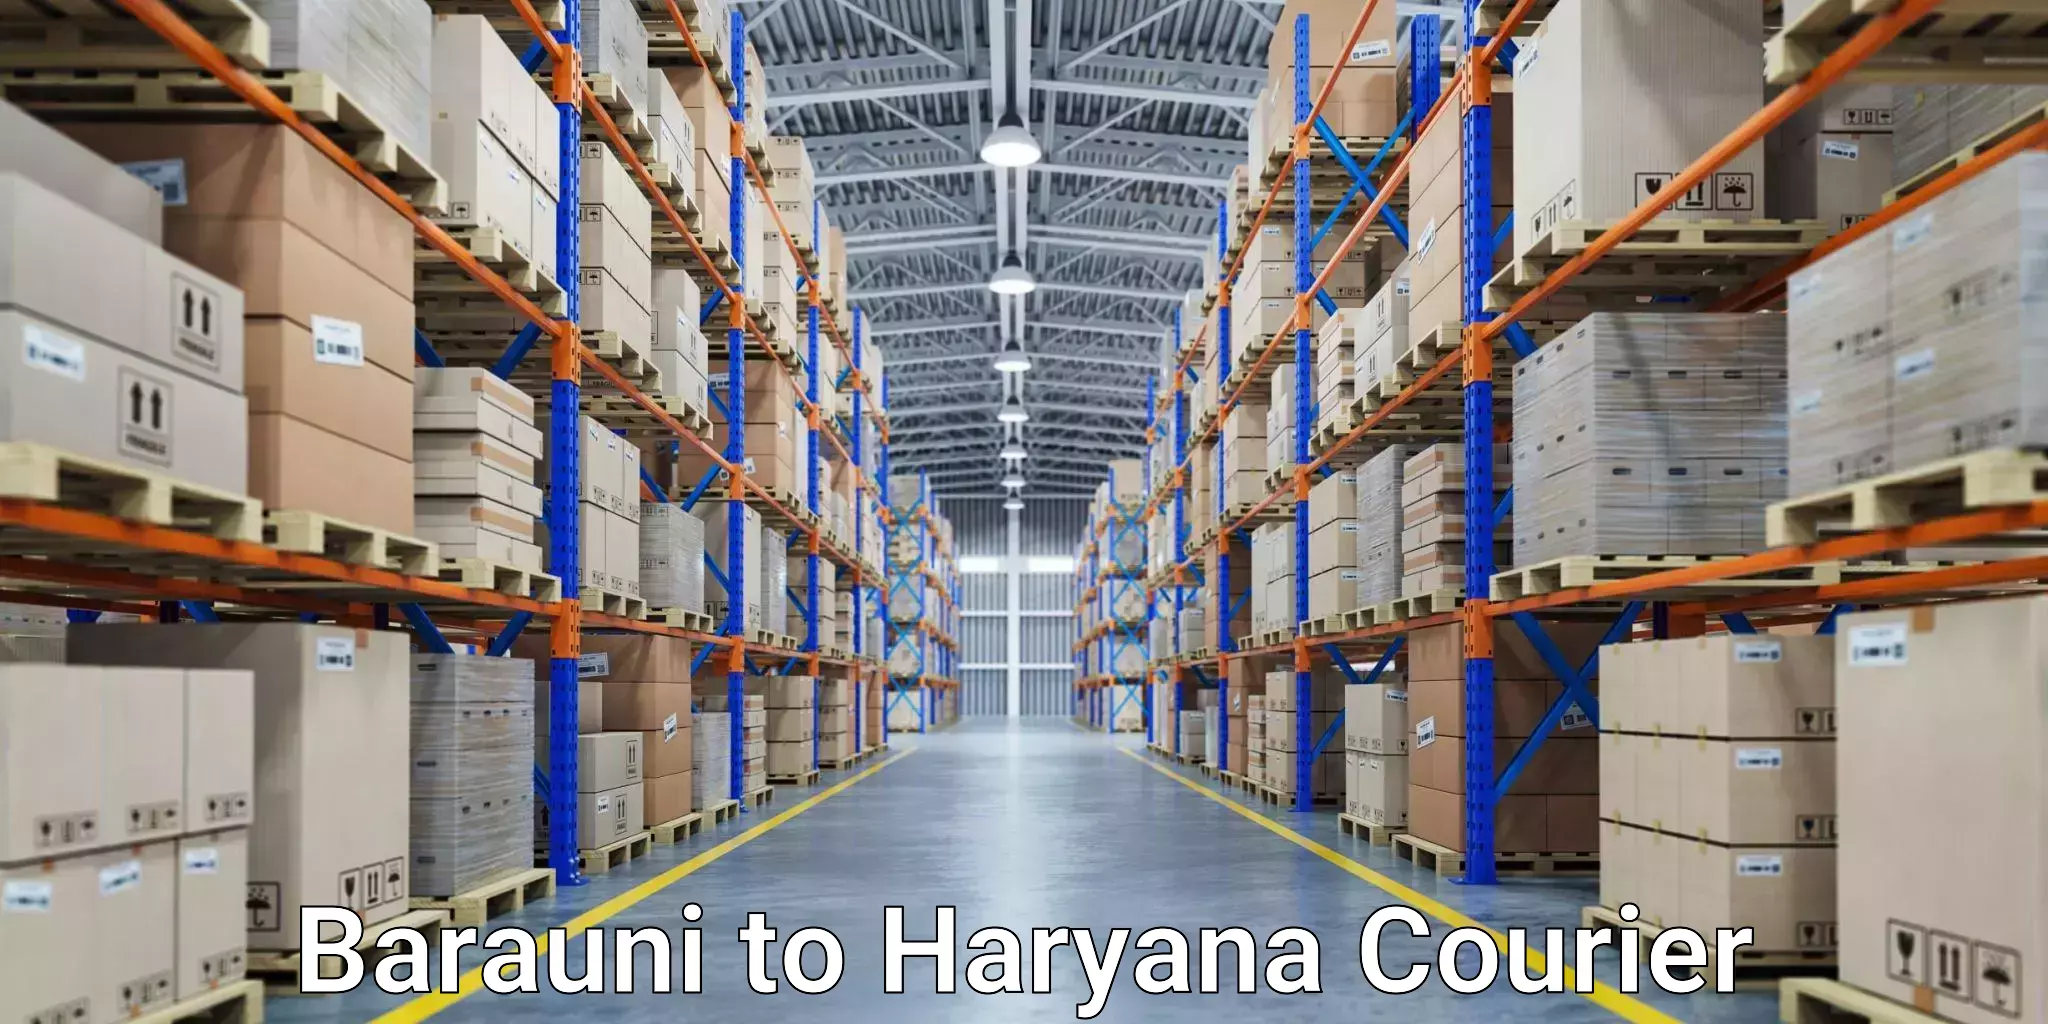 Courier service innovation Barauni to Bhuna